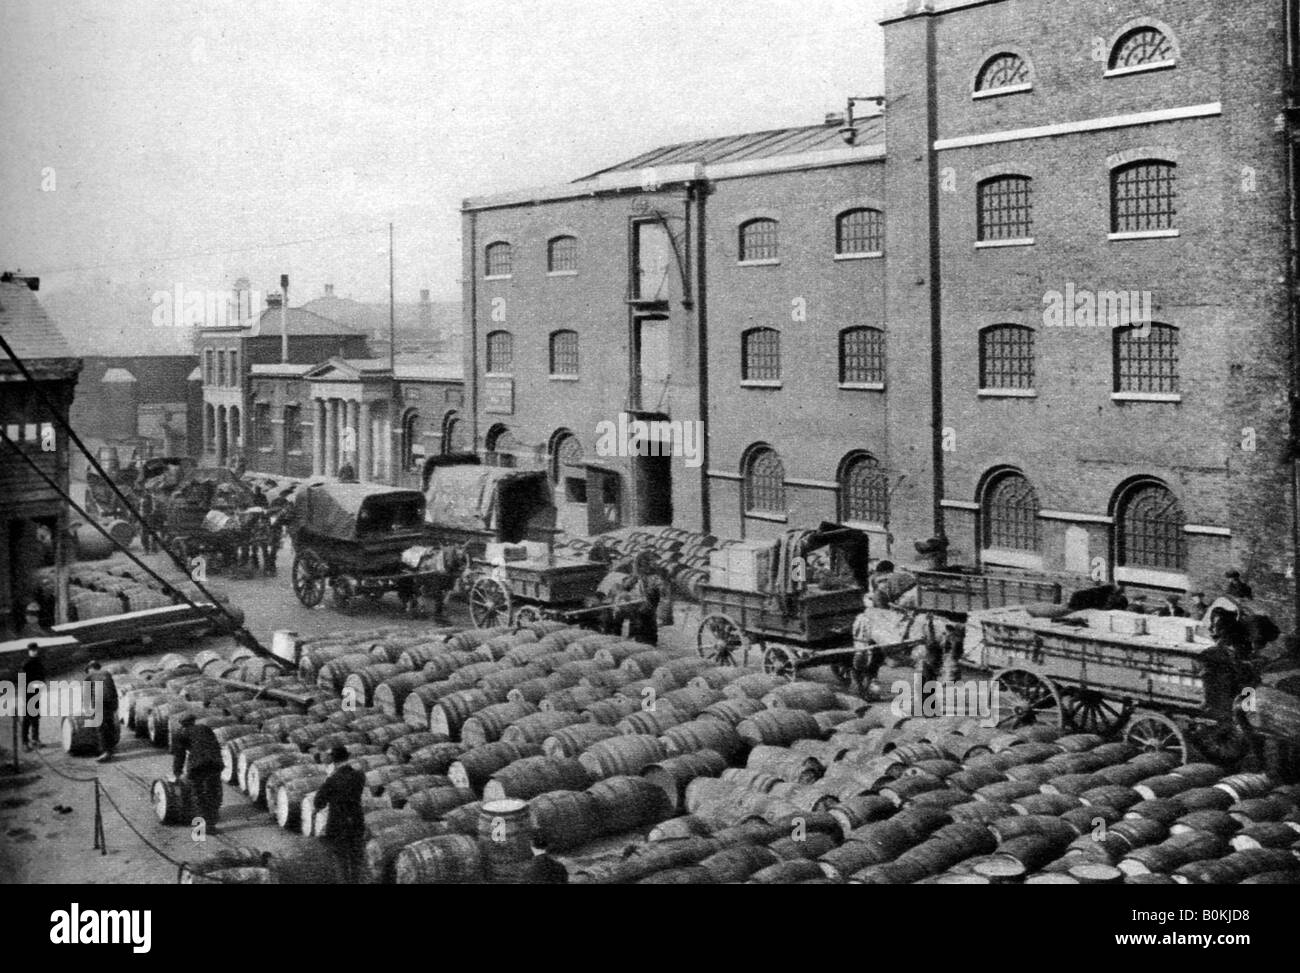 Barrels of molasses, West India Docks, London, 1926-1927. Artist: Langfier Photo Stock Photo